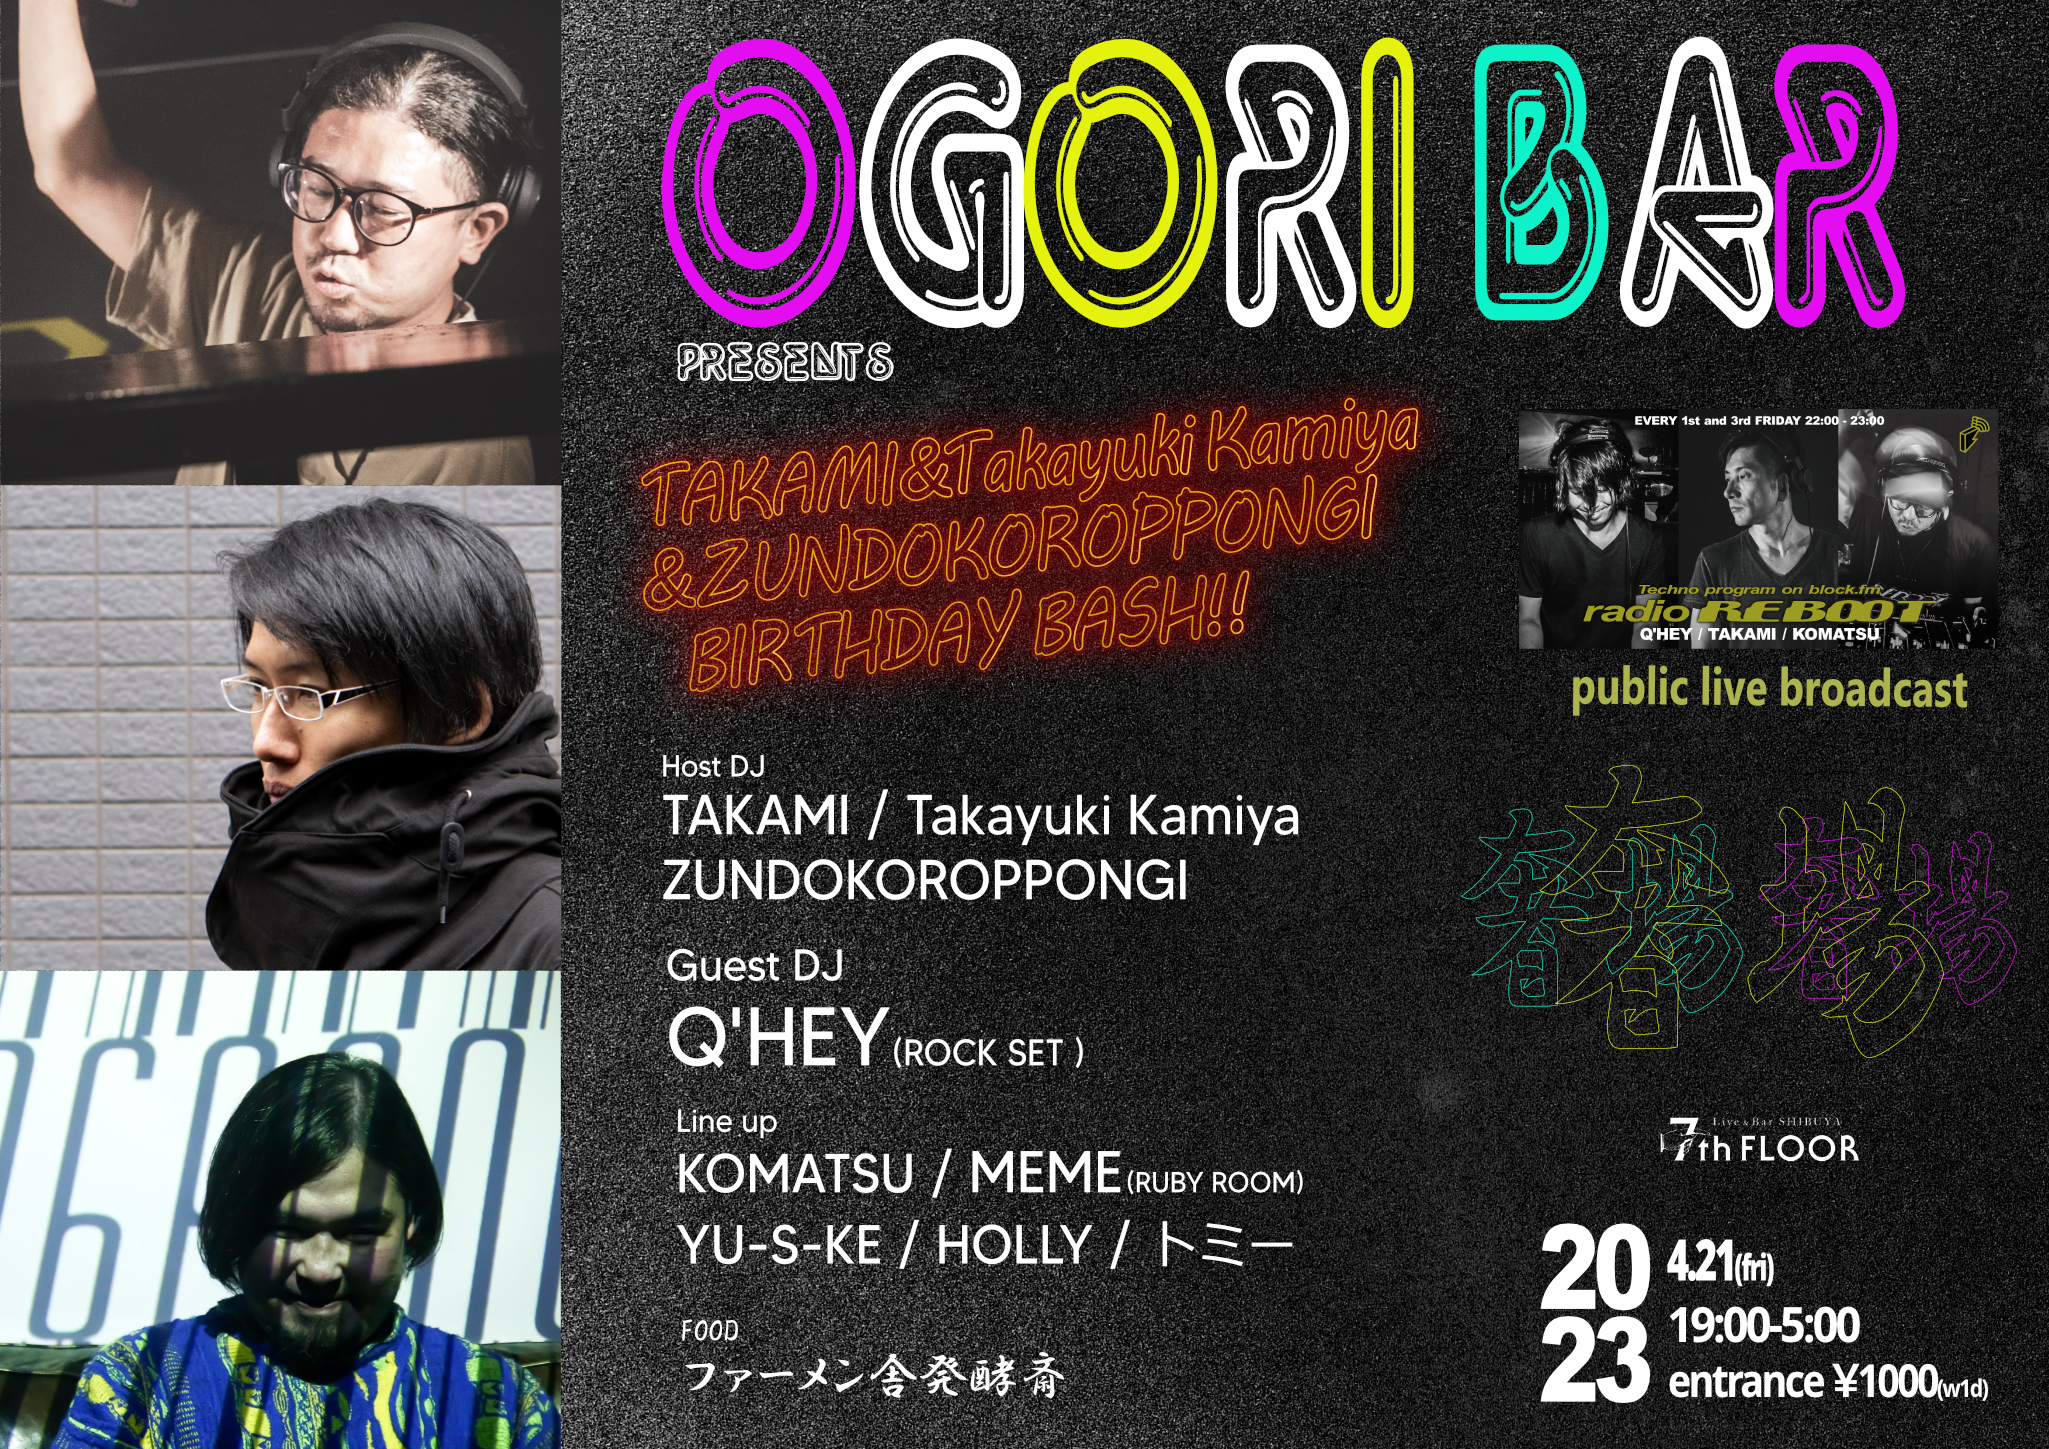 “ogori bar presents TAKAMI&Takayuki Kamiya&ZUNDOKOROPPONGI BIRTHDAY BASH!! & block.fm「radio REBOOT」公開生放送”